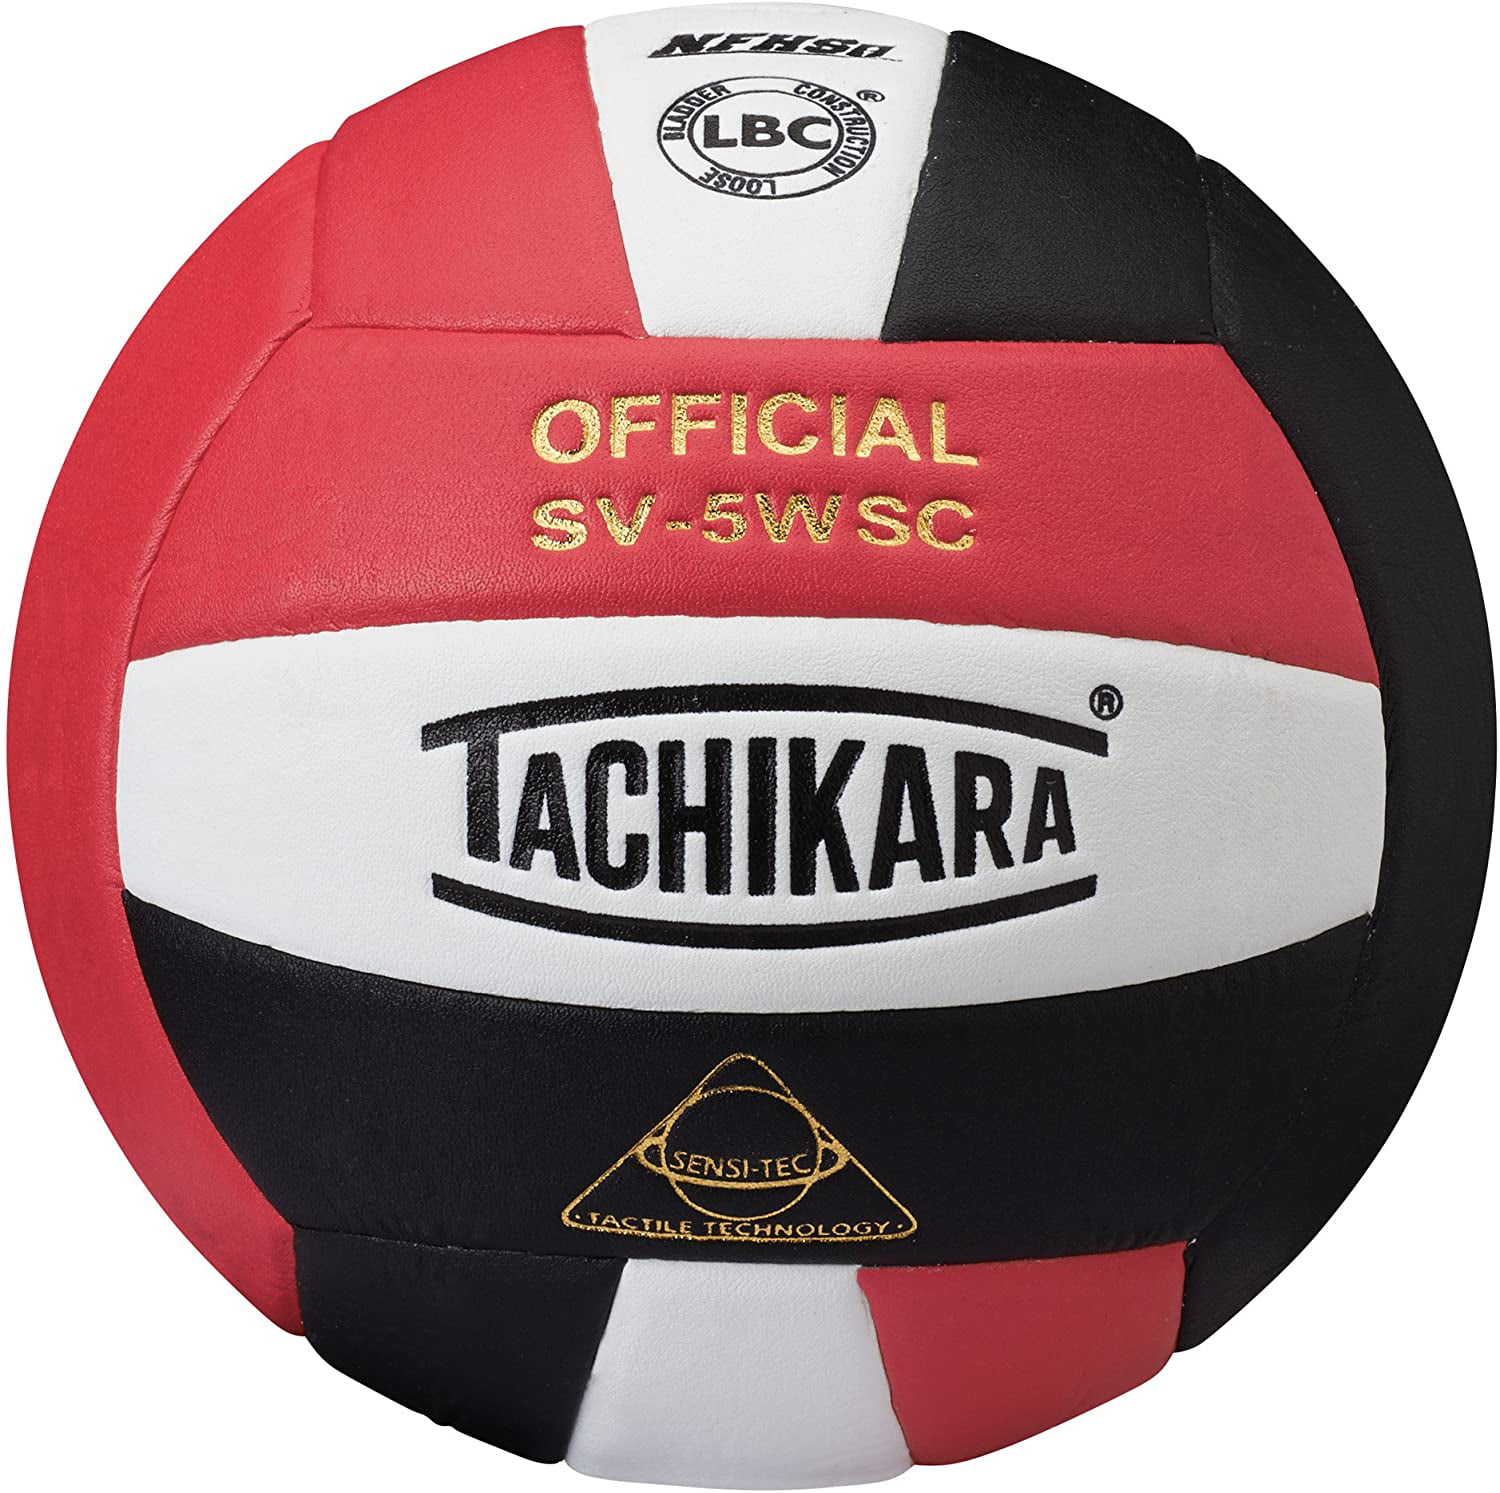 Tachikara Sv5wsc Sensi Tec Composite High Performance Volleyball for sale online 